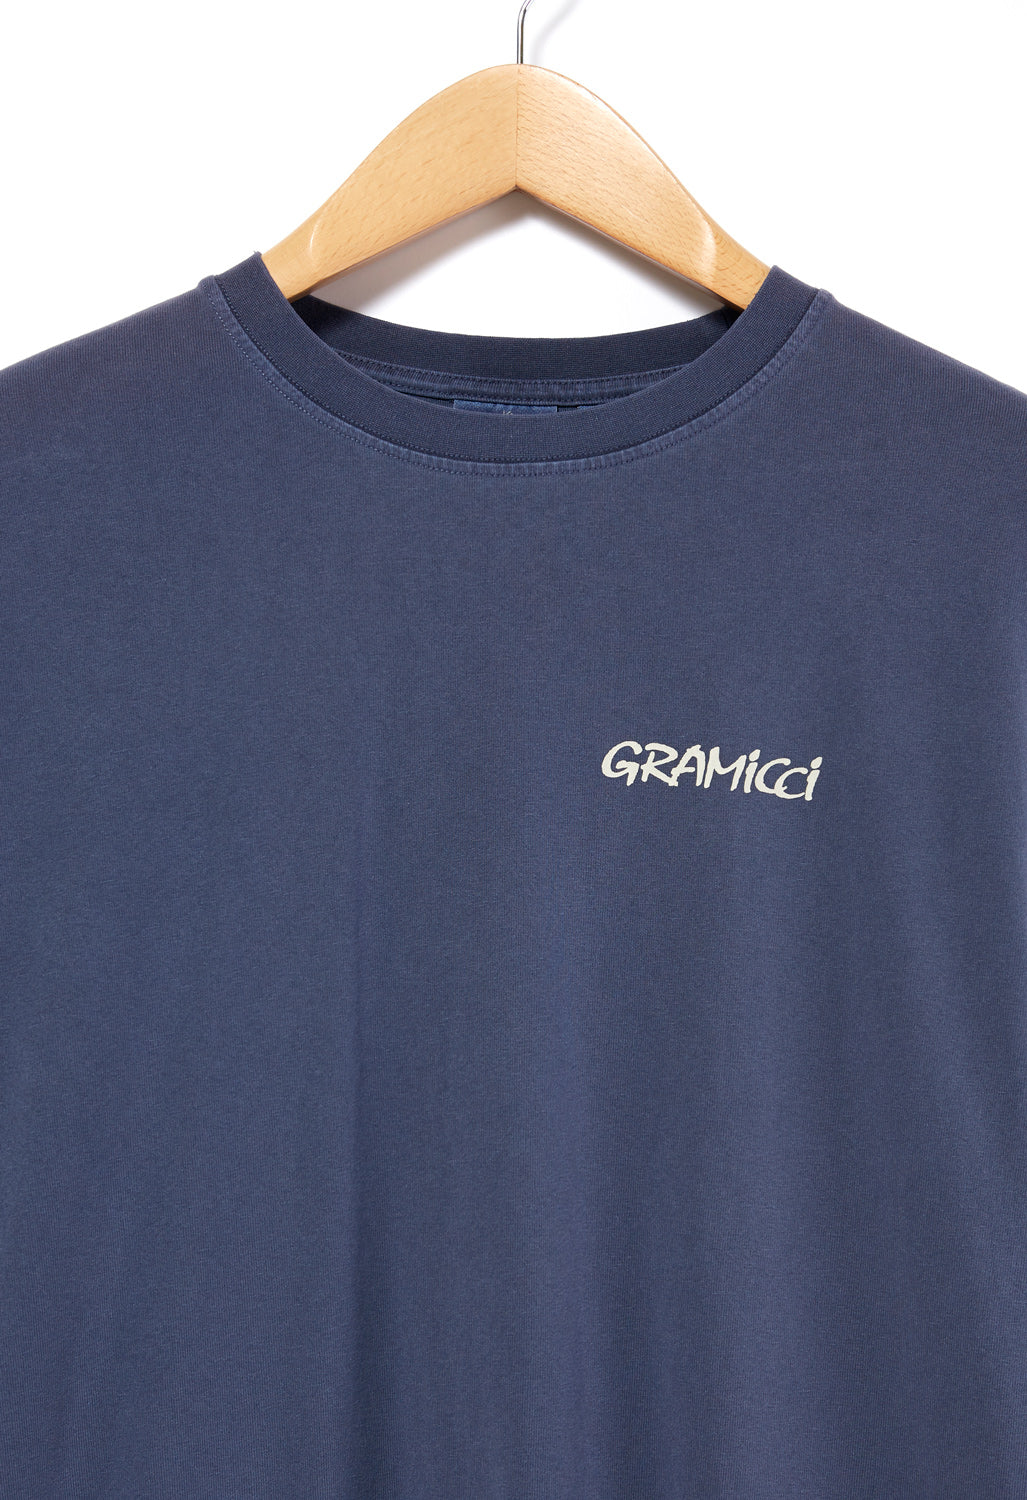 Gramicci G Pant Long Sleeved T-Shirt - Navy Pigment